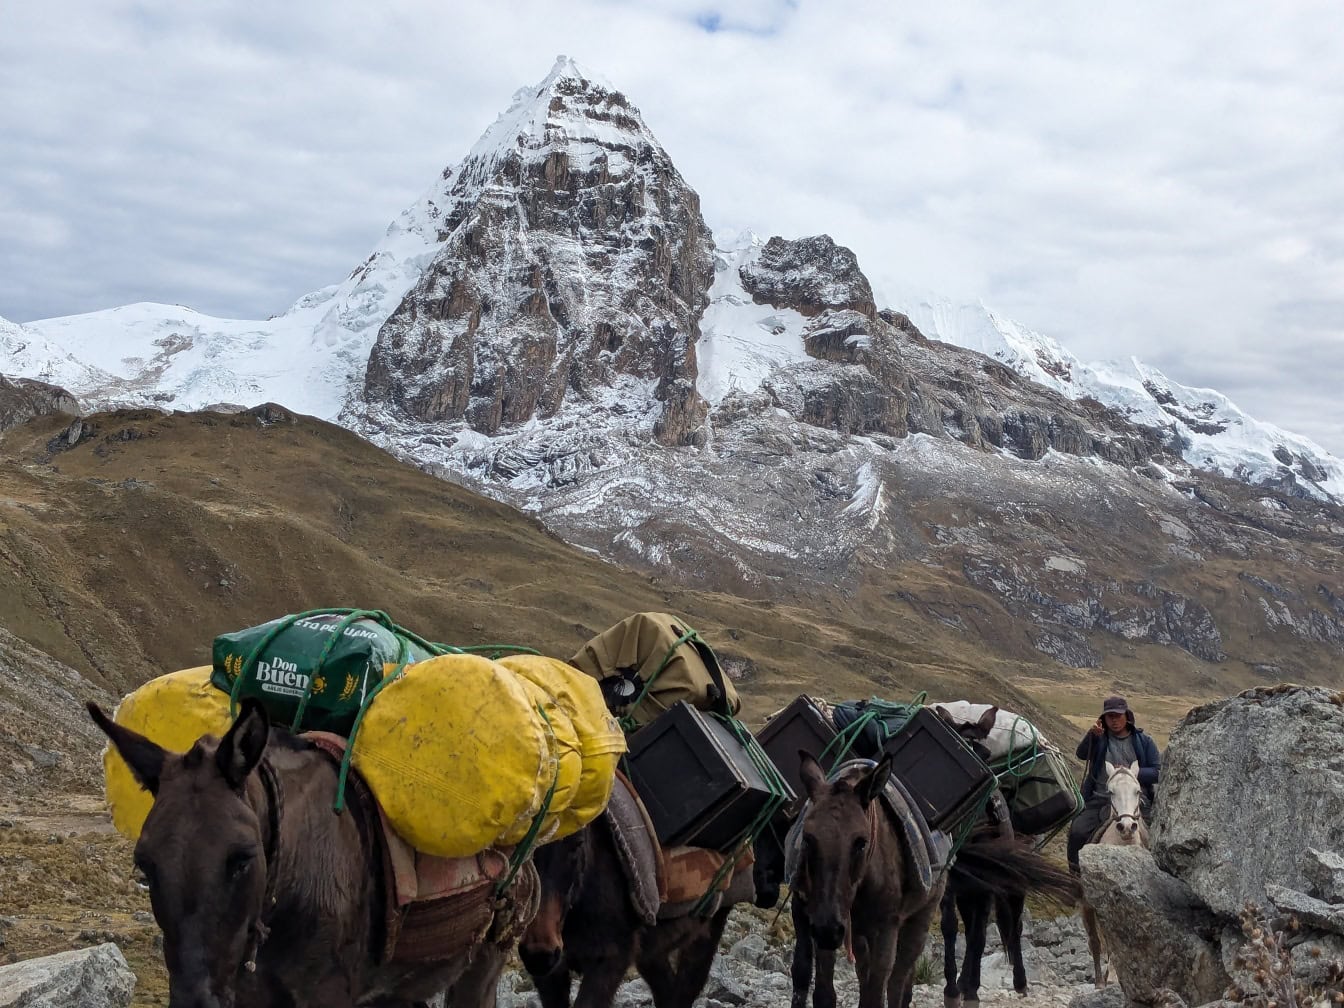 Karavan peruanskih mula koje prevoze teret na planinskom lancu Cordillera Huayhuash u Andama Perua